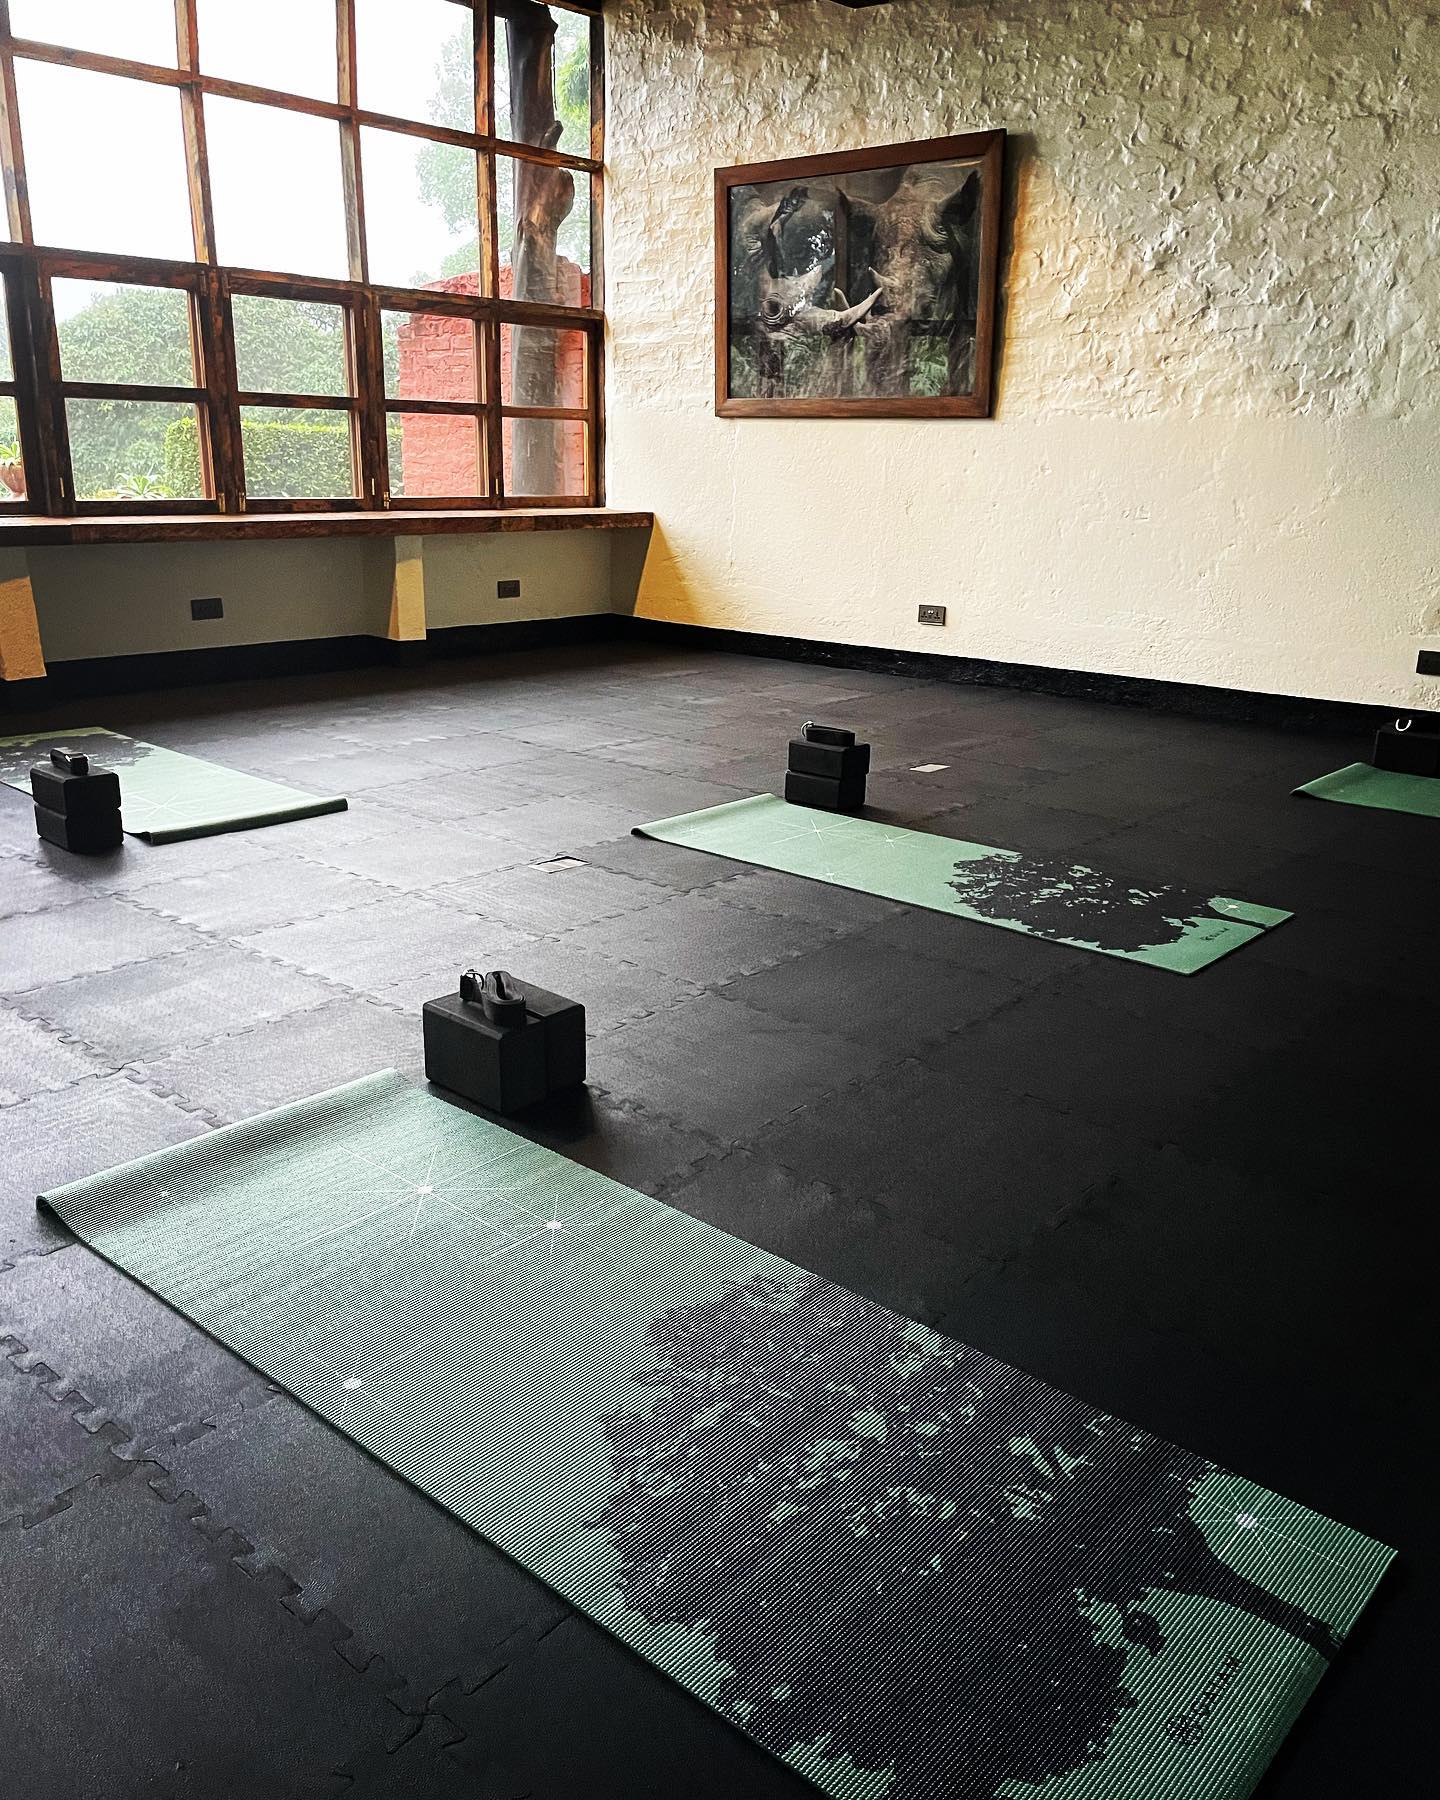 Starting a rainy day with a gentle stretch on our new #gaiam mats #yoga #studio #om #omandflow #asana #sunsalutation #wellbeing #wellnesstravel #wellness #zen #breathe #vinyasa @gaiam